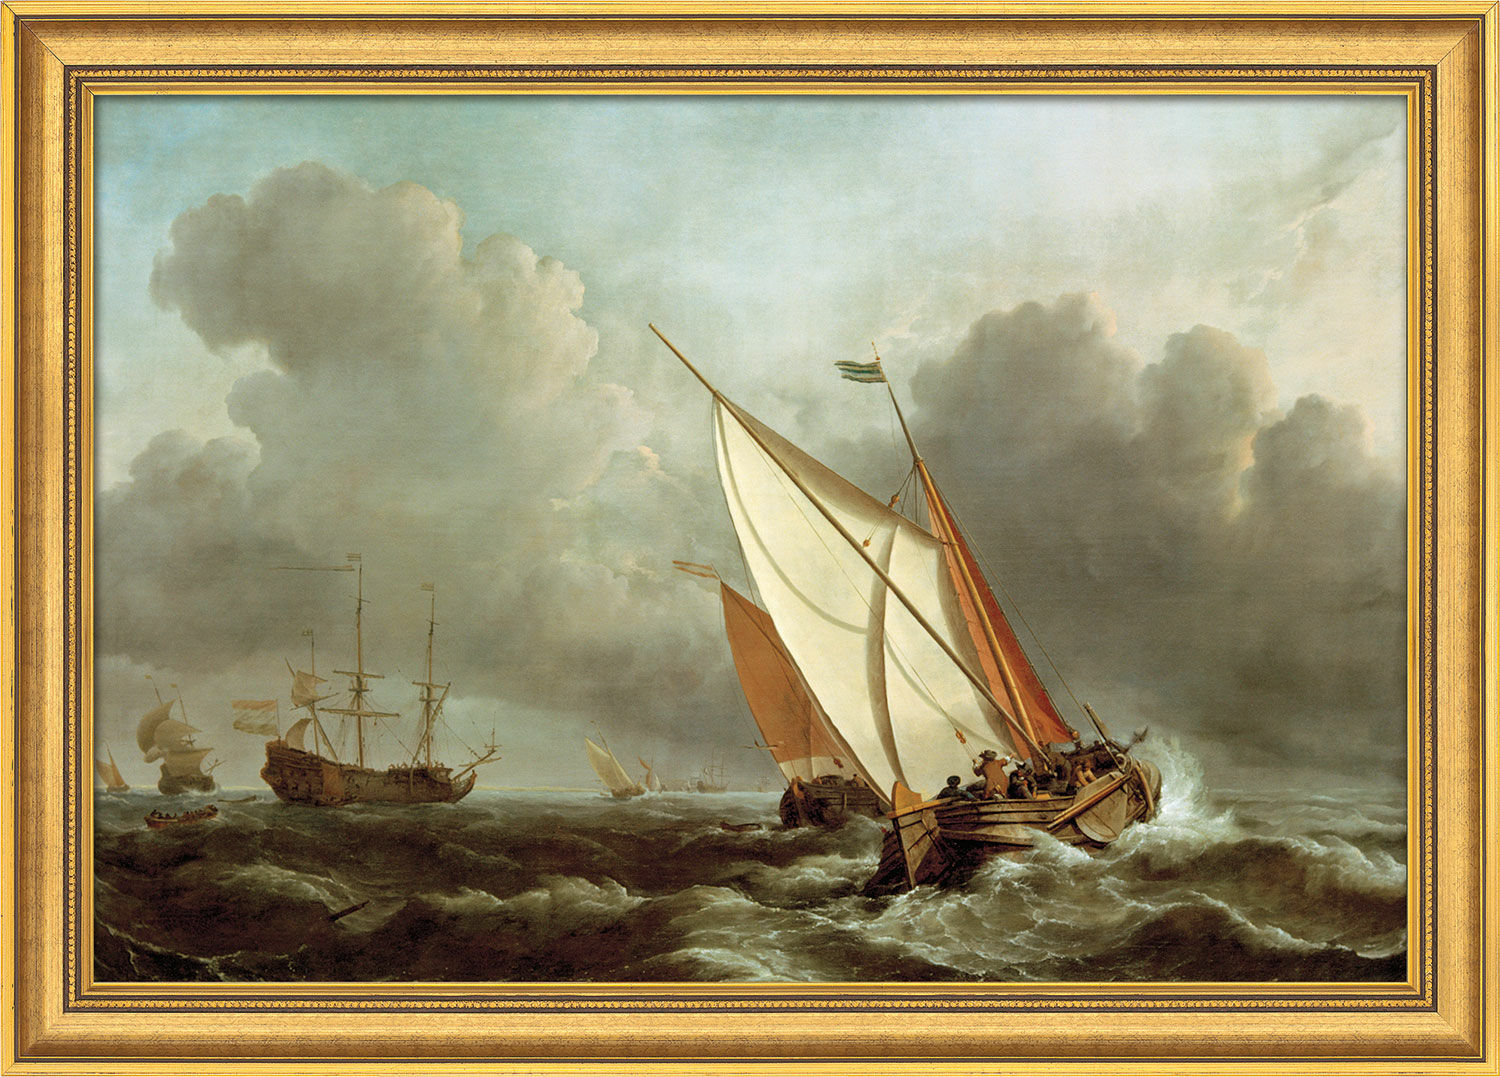 Picture "Ship in a Stormy Sea" (1671), framed by Willem van de Velde